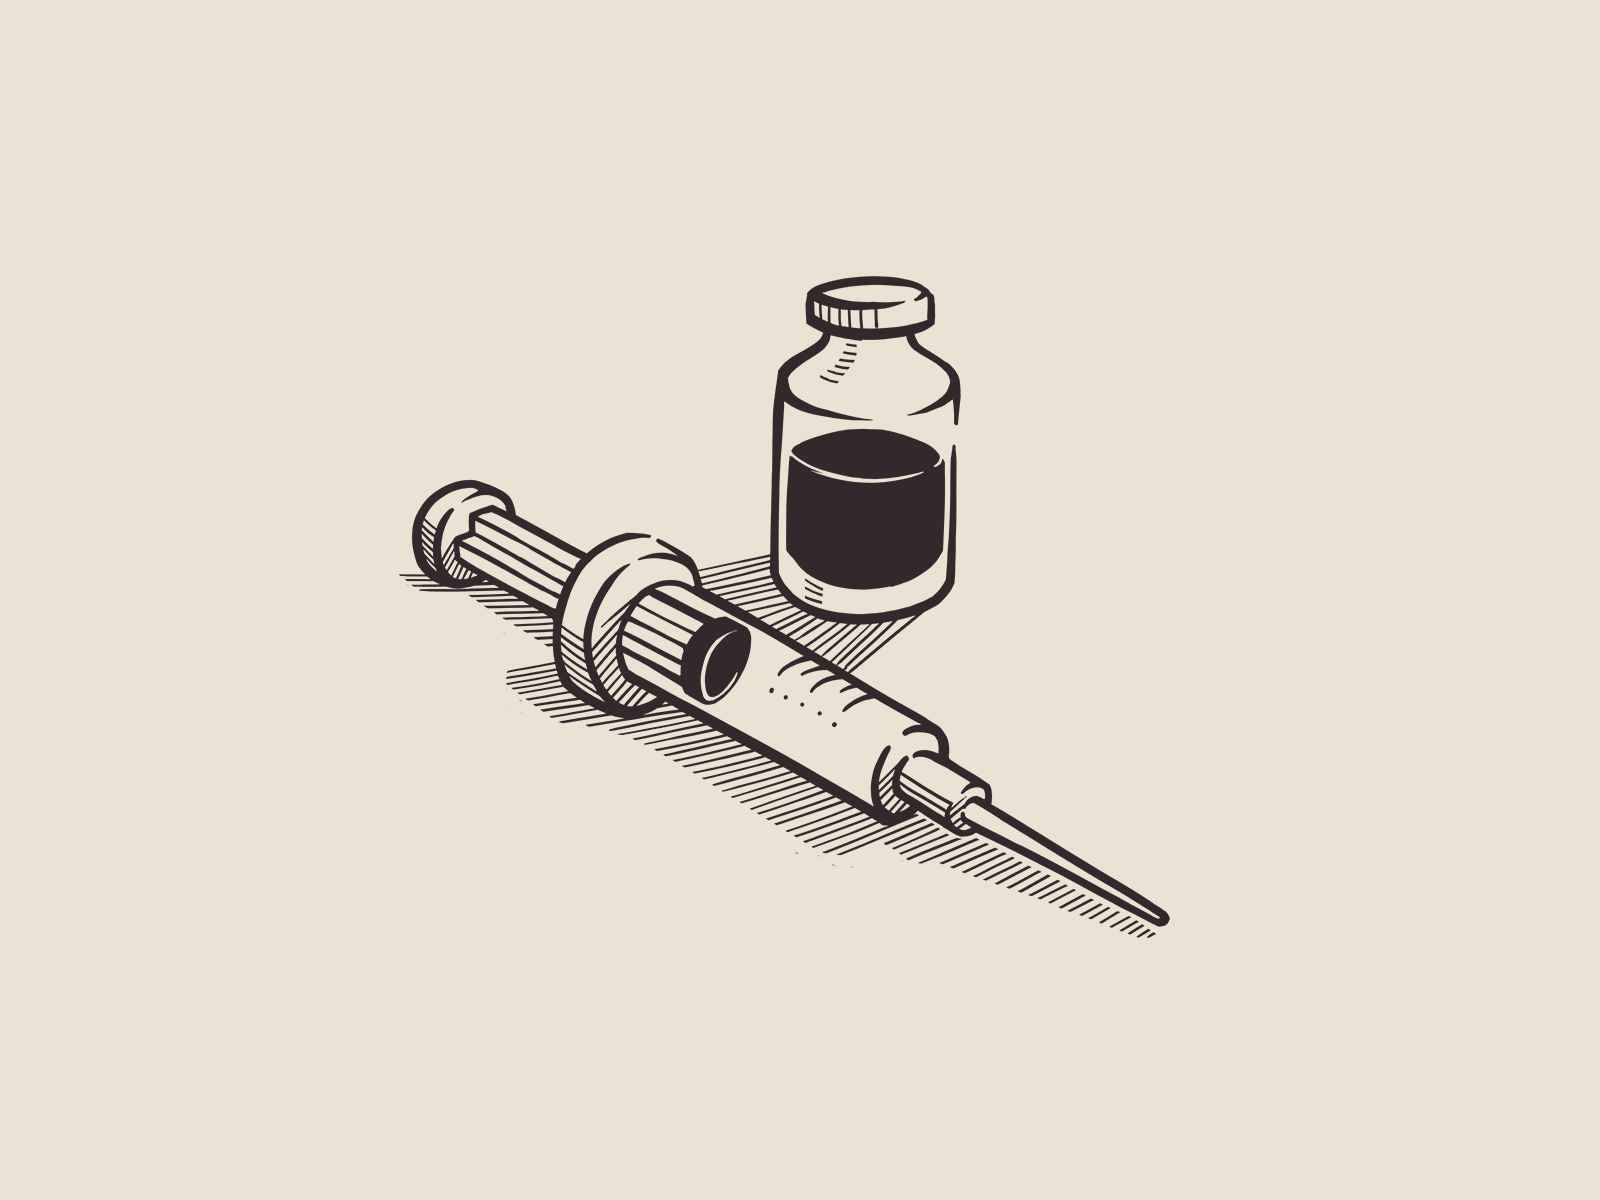 Injection, medicine illustration by Rifky Aditya on Dribbble